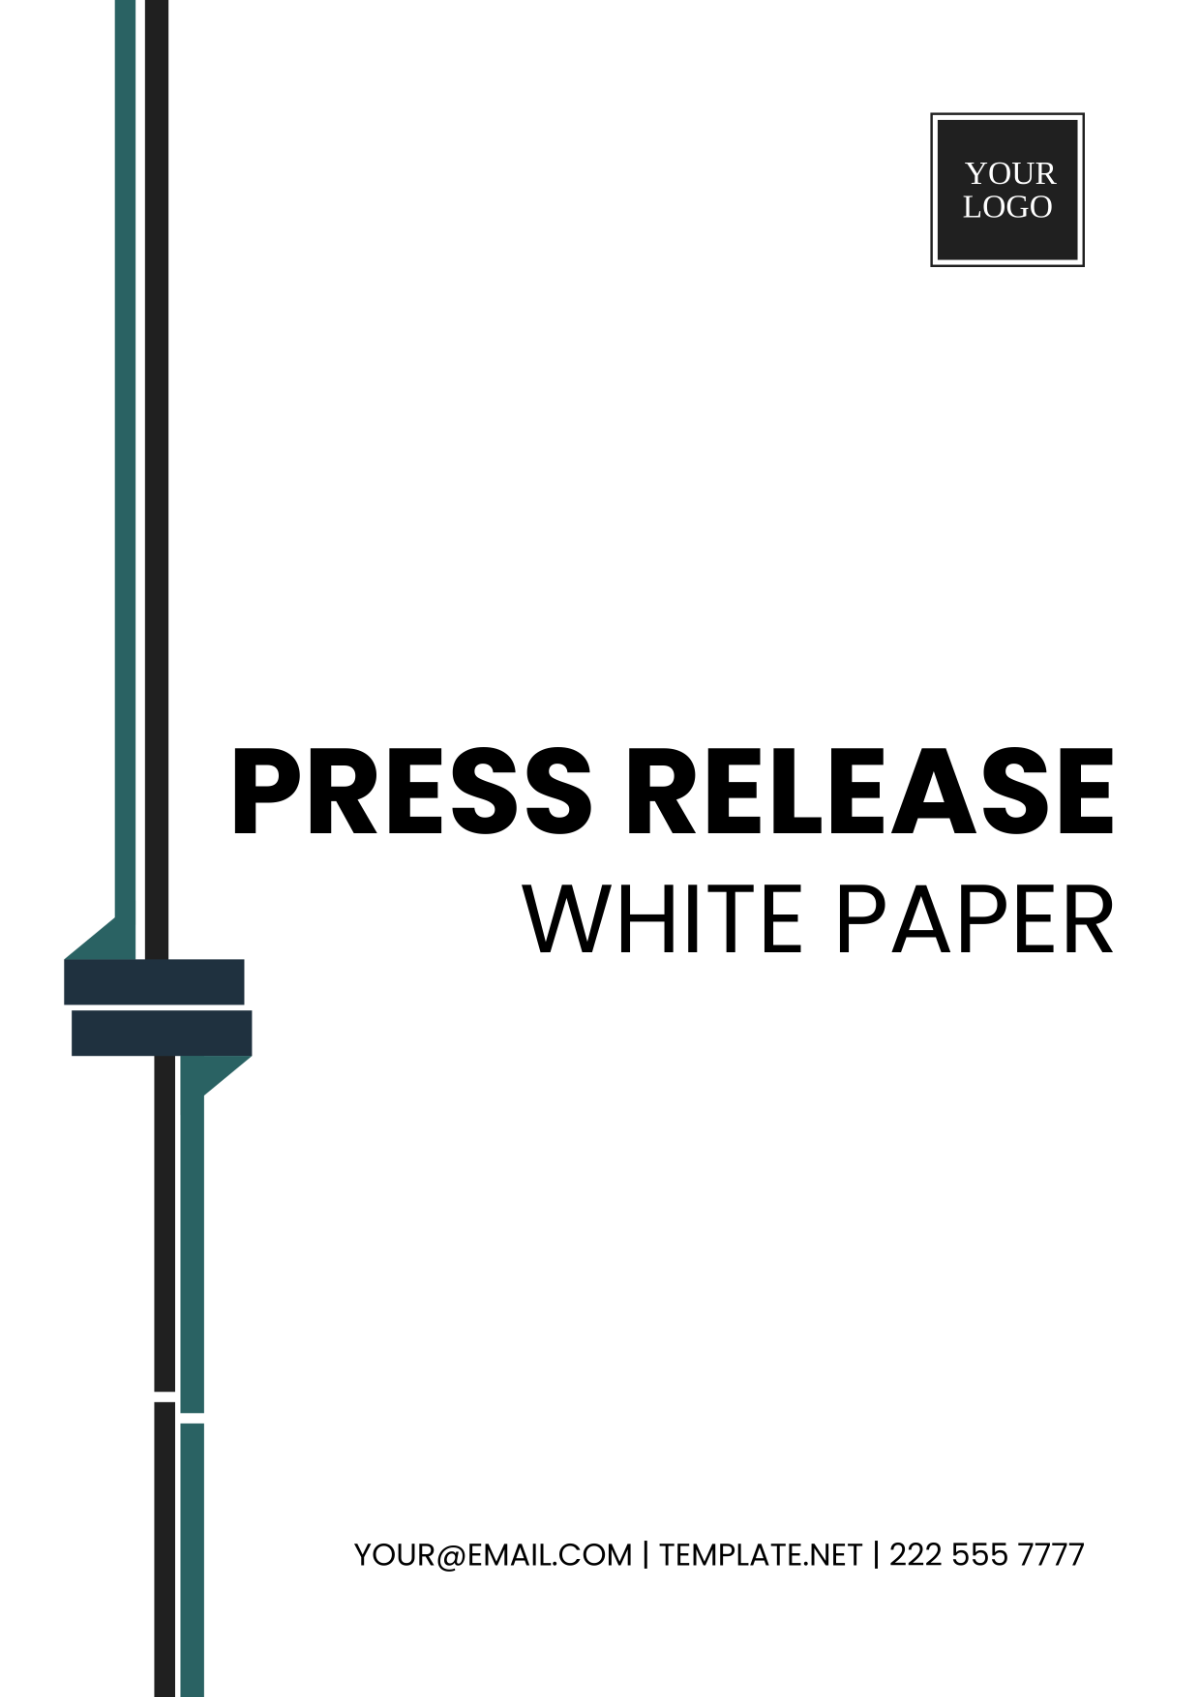 Free Press Release White Paper Template